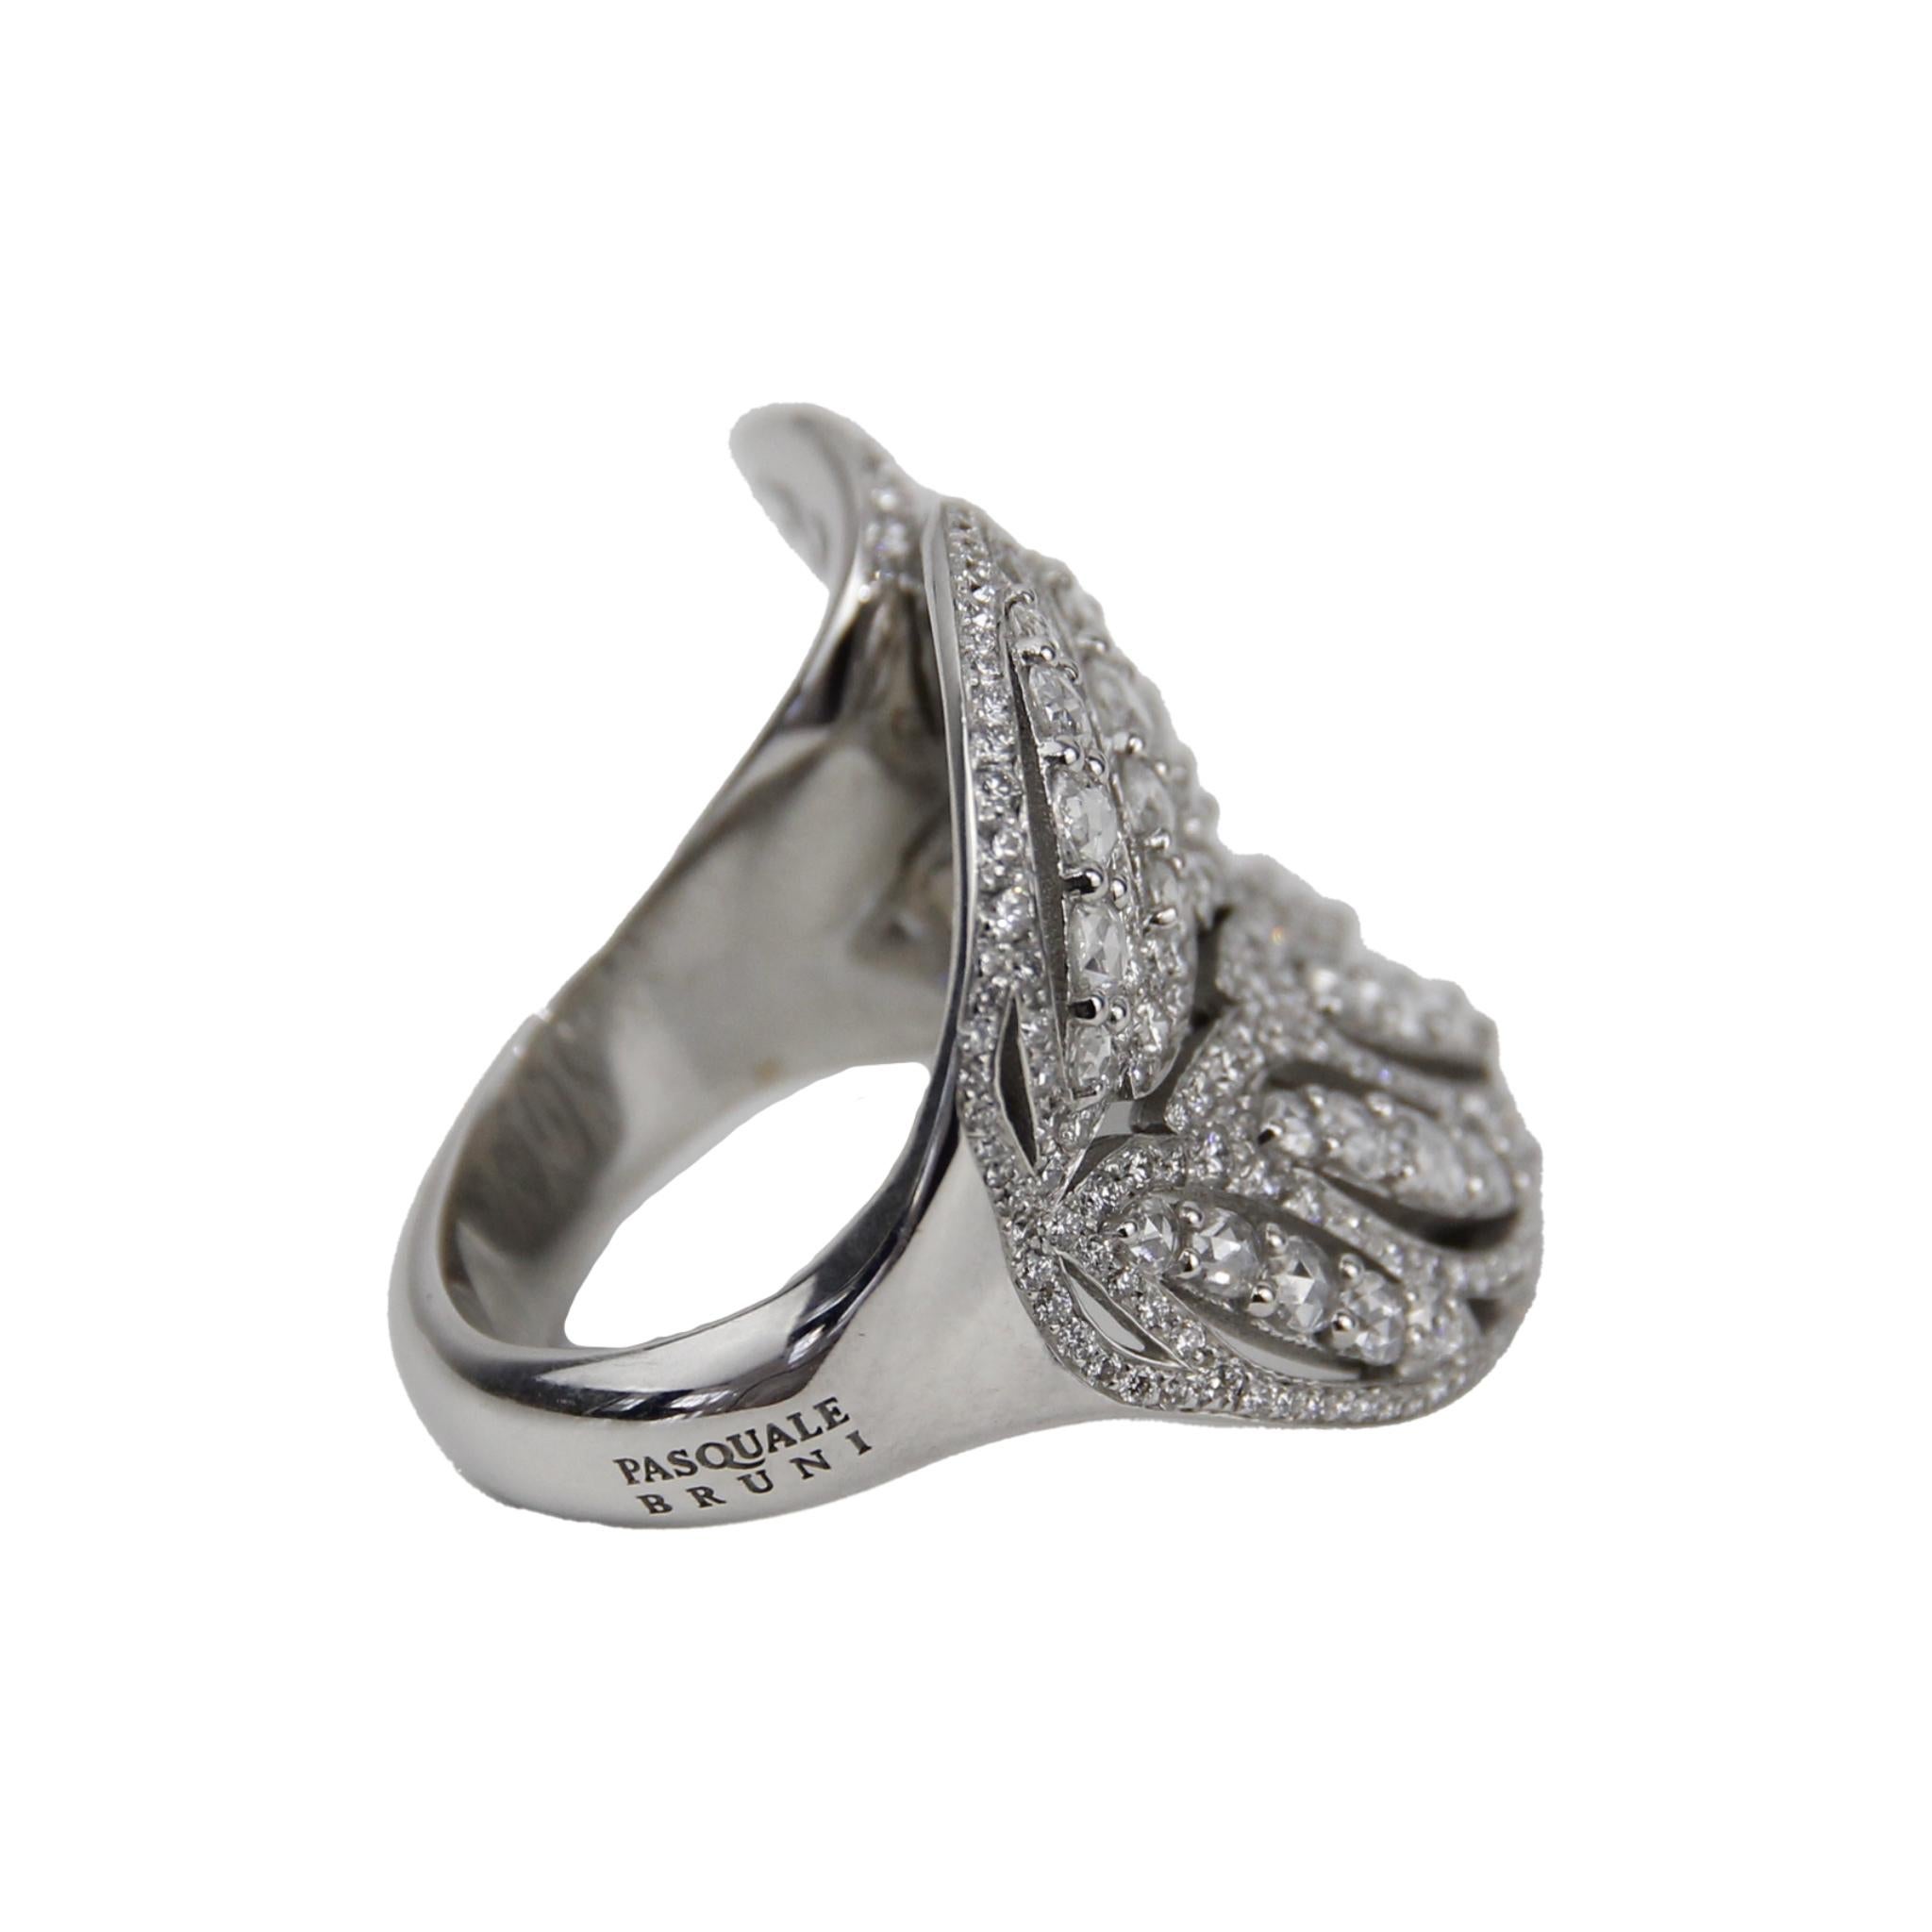 Pasquale Bruni Leaf Ring
18Kt White Gold
Diamond: 3.48ctw
Size: 6.50